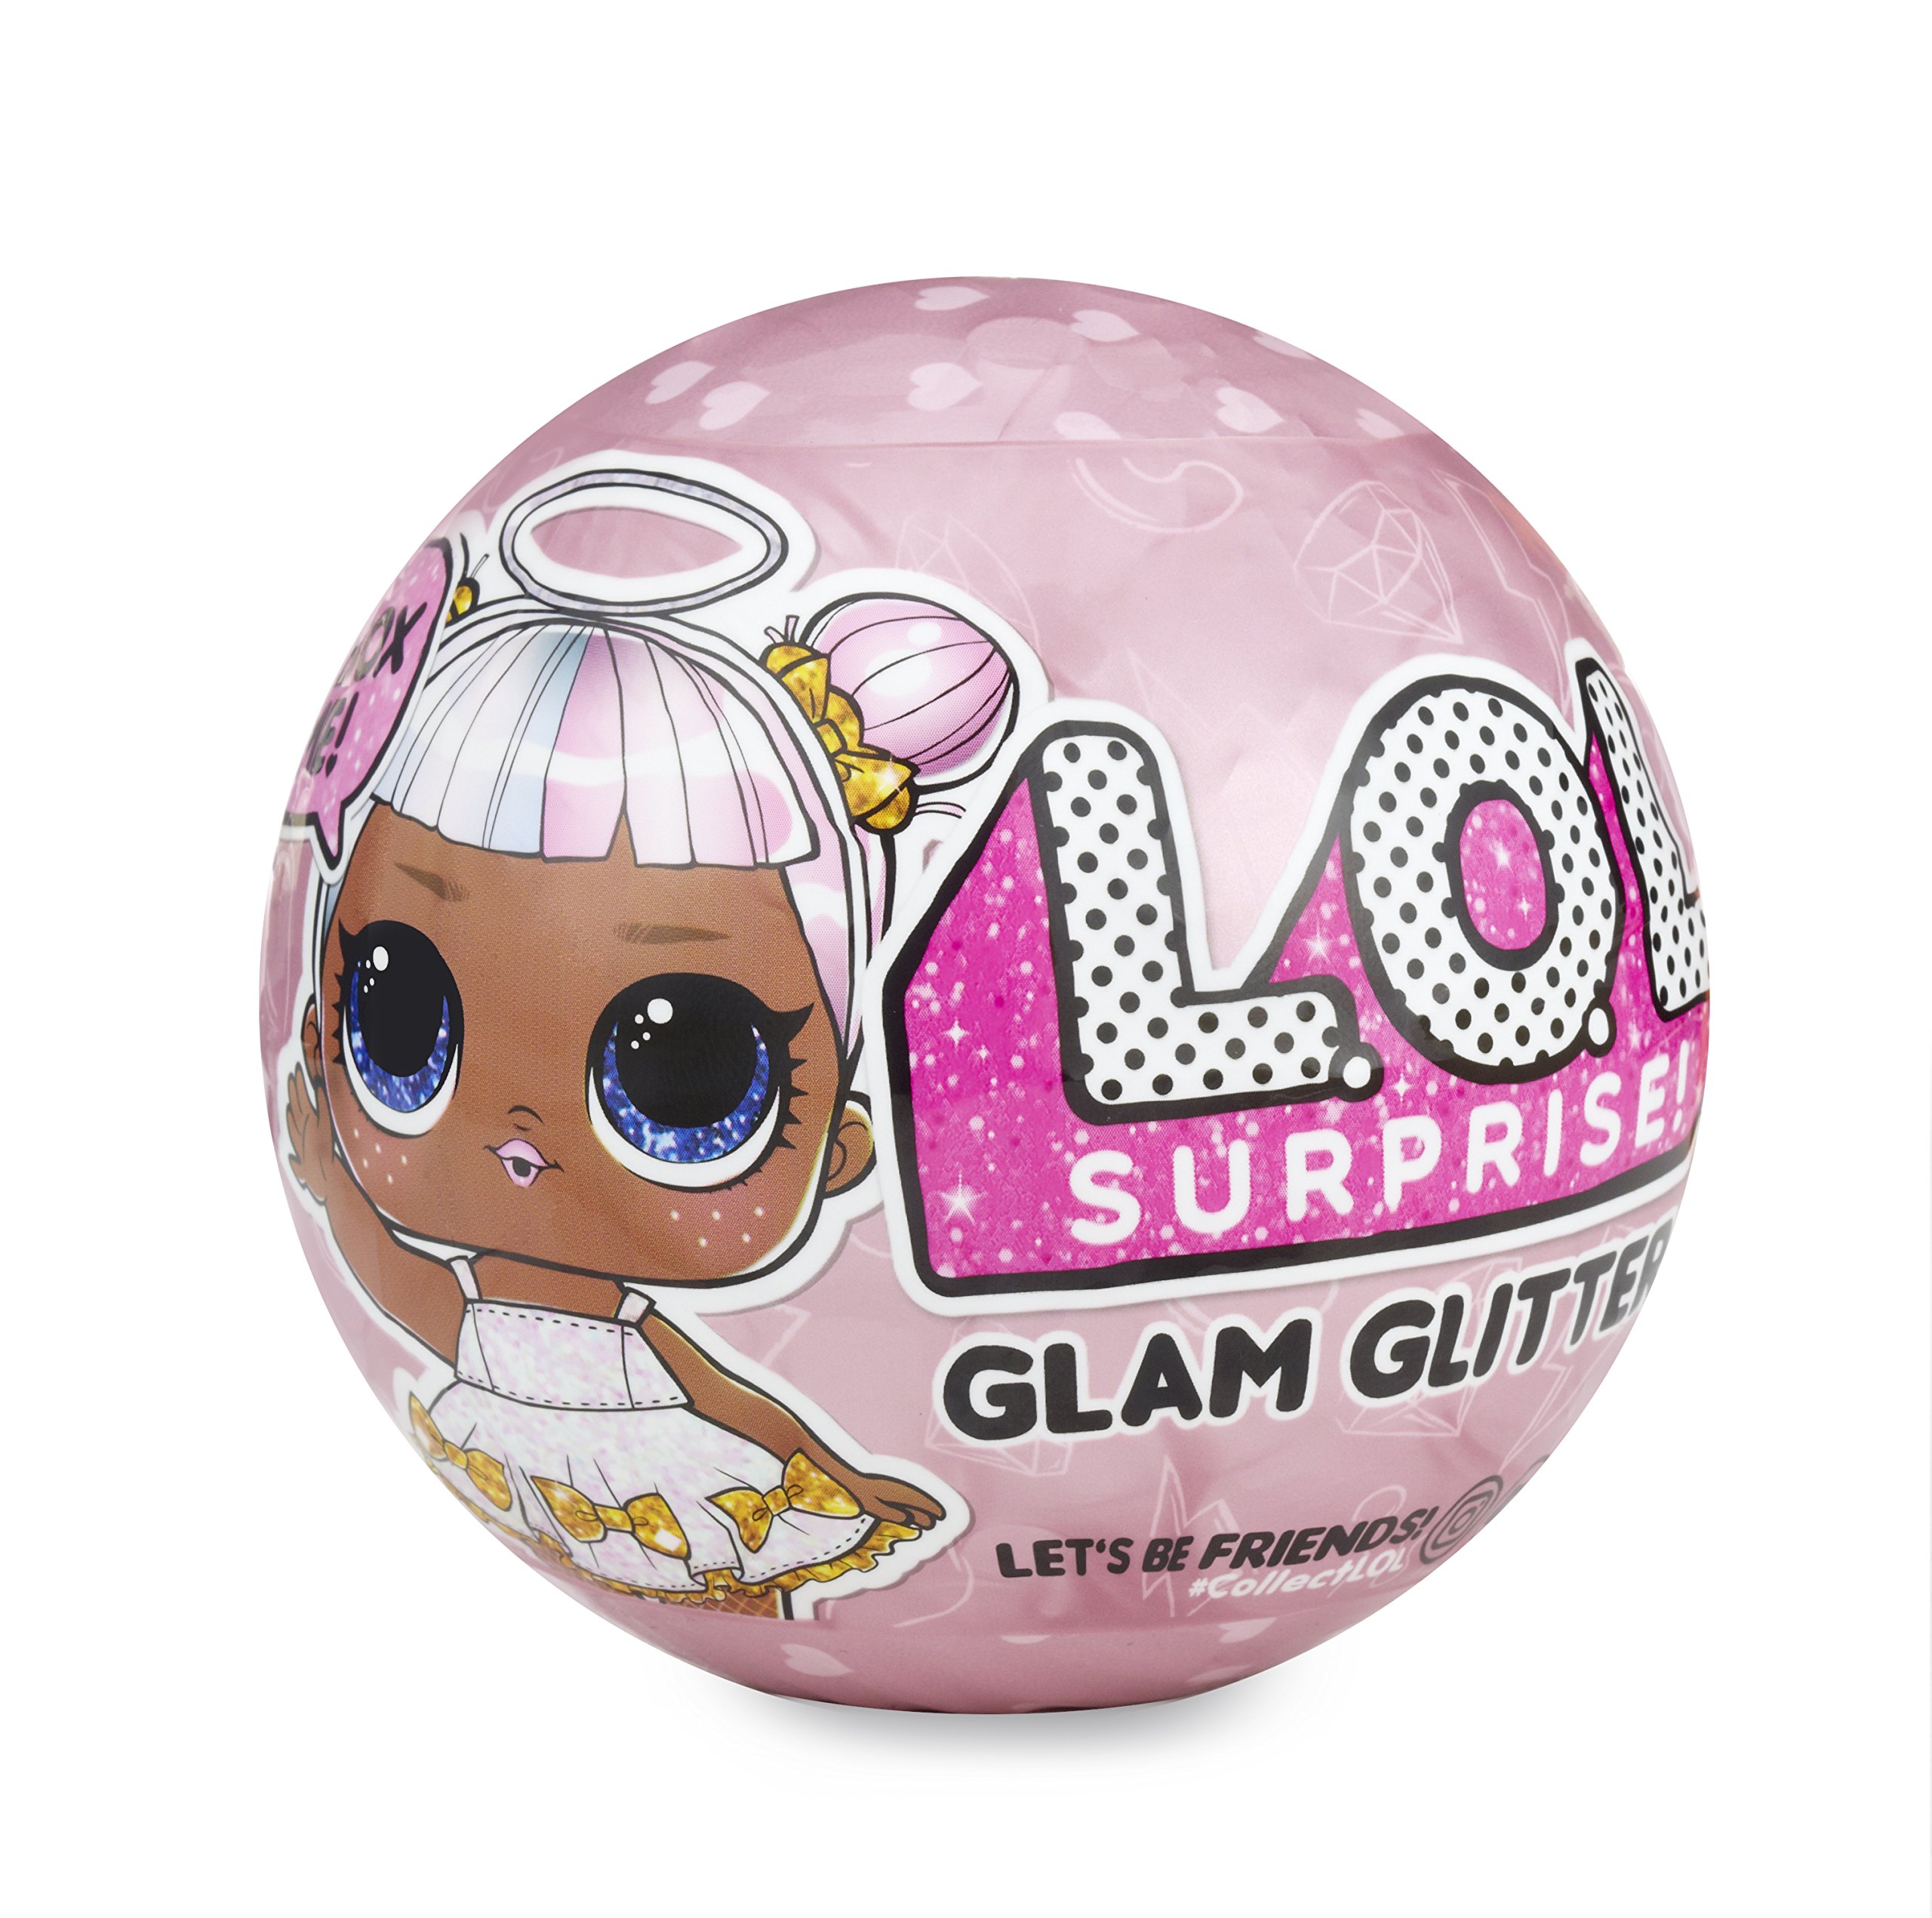 ЛОЛ Глэм Глиттер (LOL Surprise Glam Glitter series 4) глиттер для слаймов wellywell glitter glue 50 мл 6 штук blestki glitterglue 6